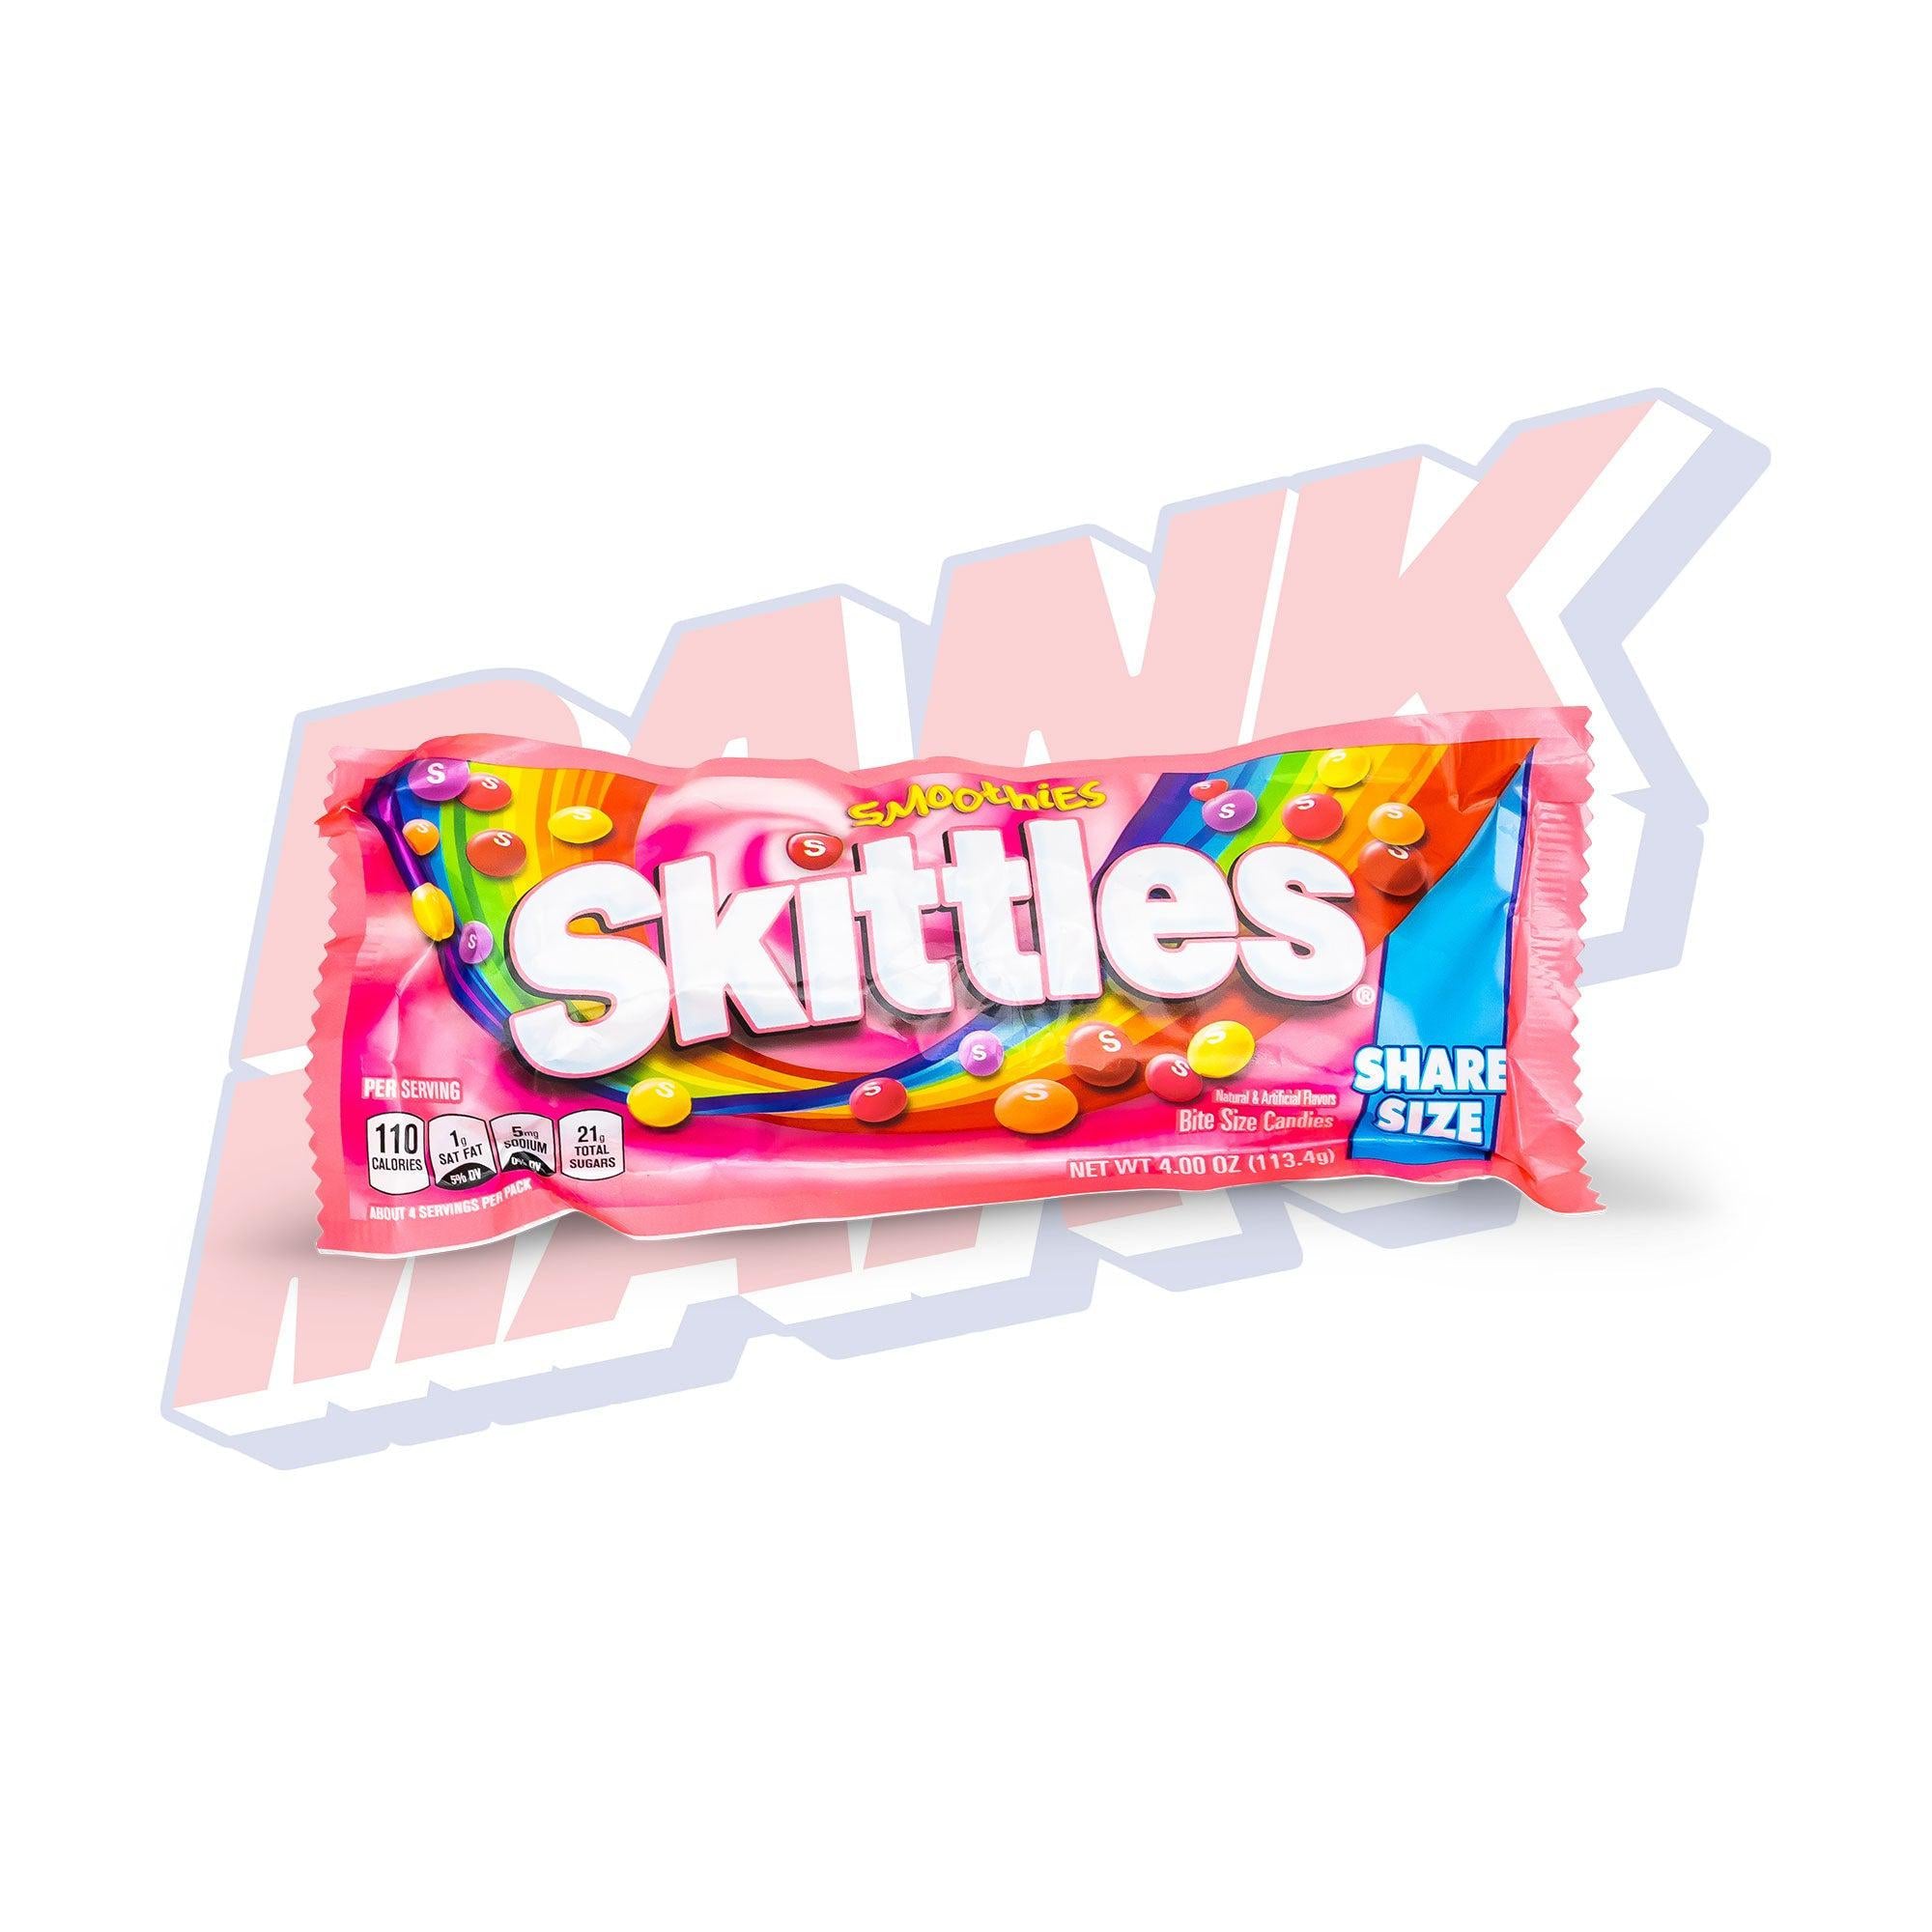 Skittles Smoothie Share Size - 4oz